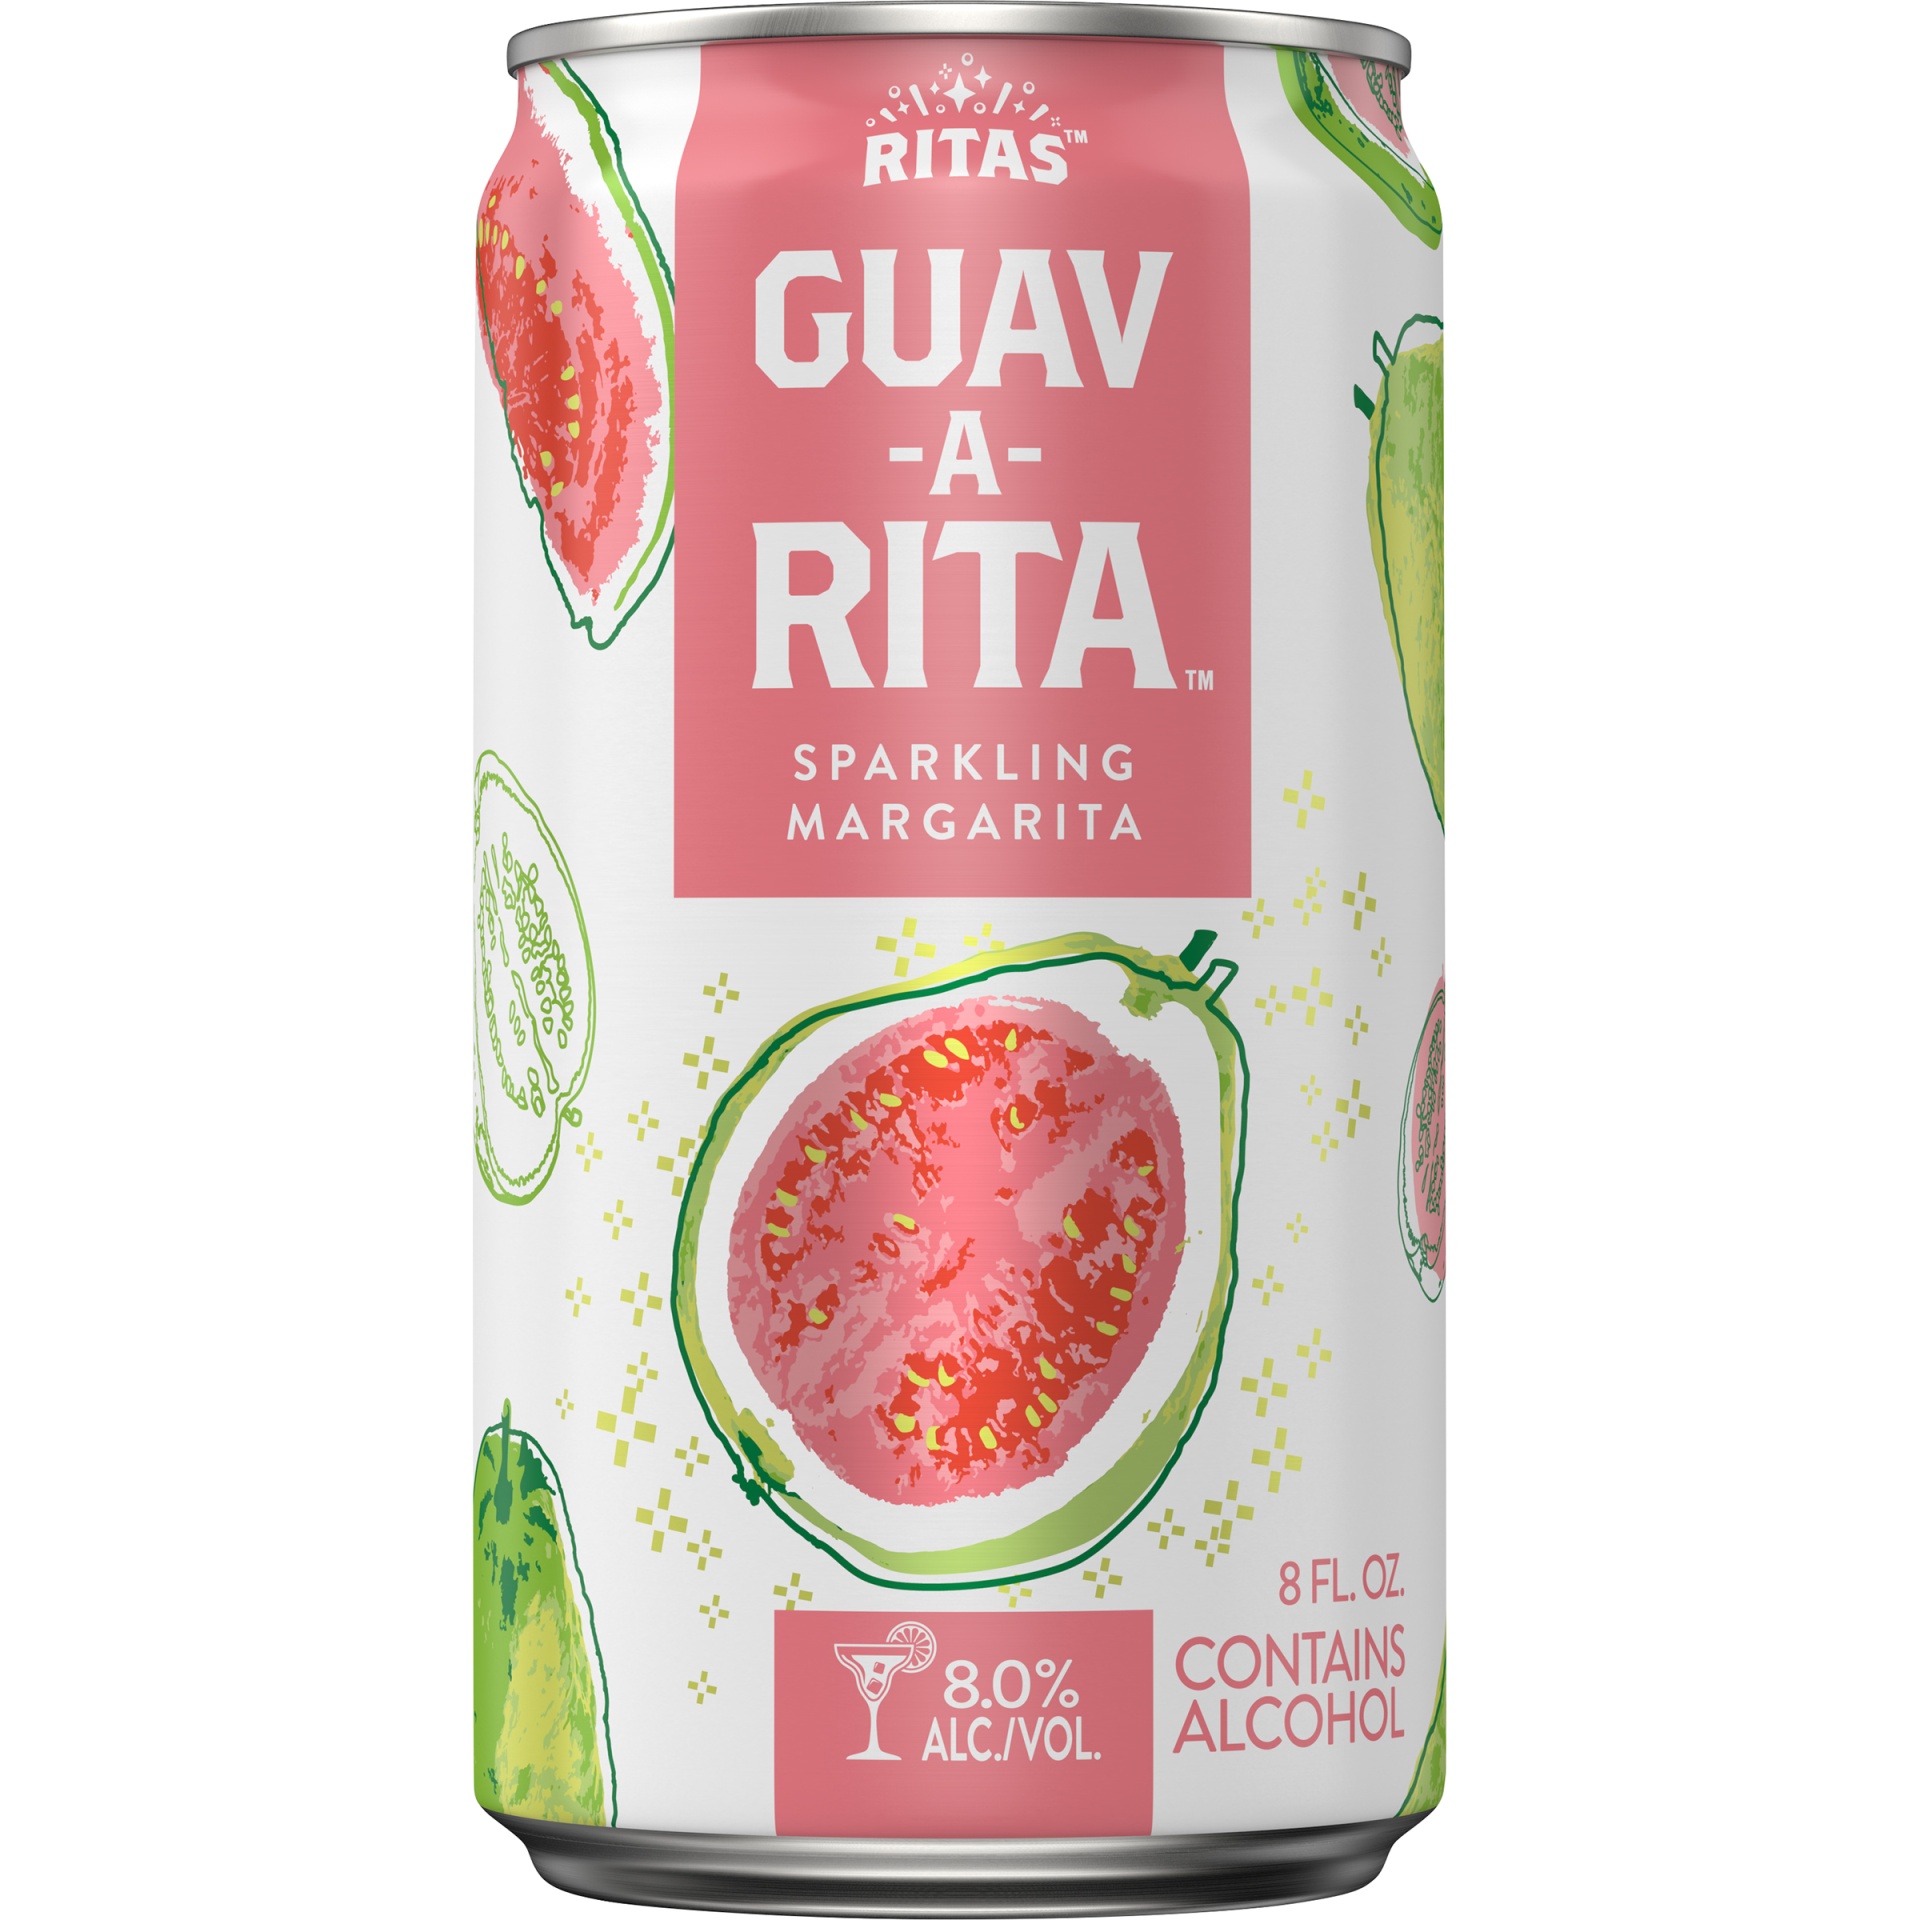 slide 1 of 2, Ritas Guav-A-Rita Sparkling Margarita 8.0% Alc./Vol., 8% ABV, 8 fl oz